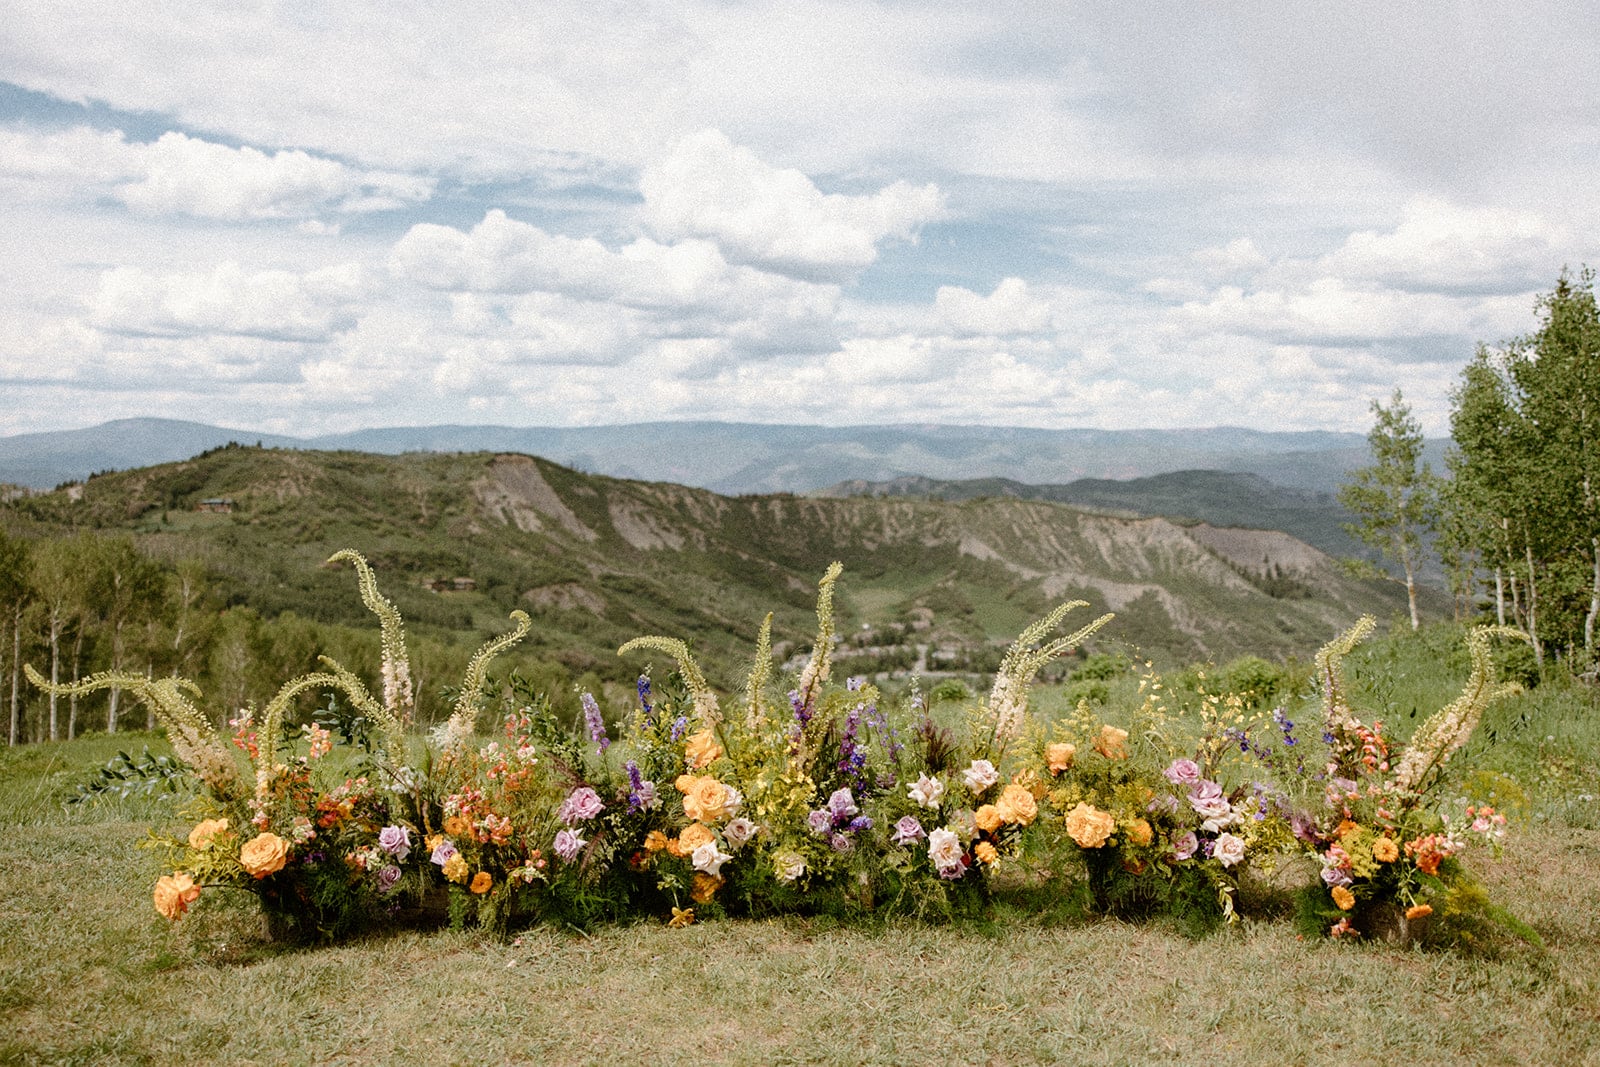 Romantic, Whimsical Summer Wedding in Aspen, Colorado